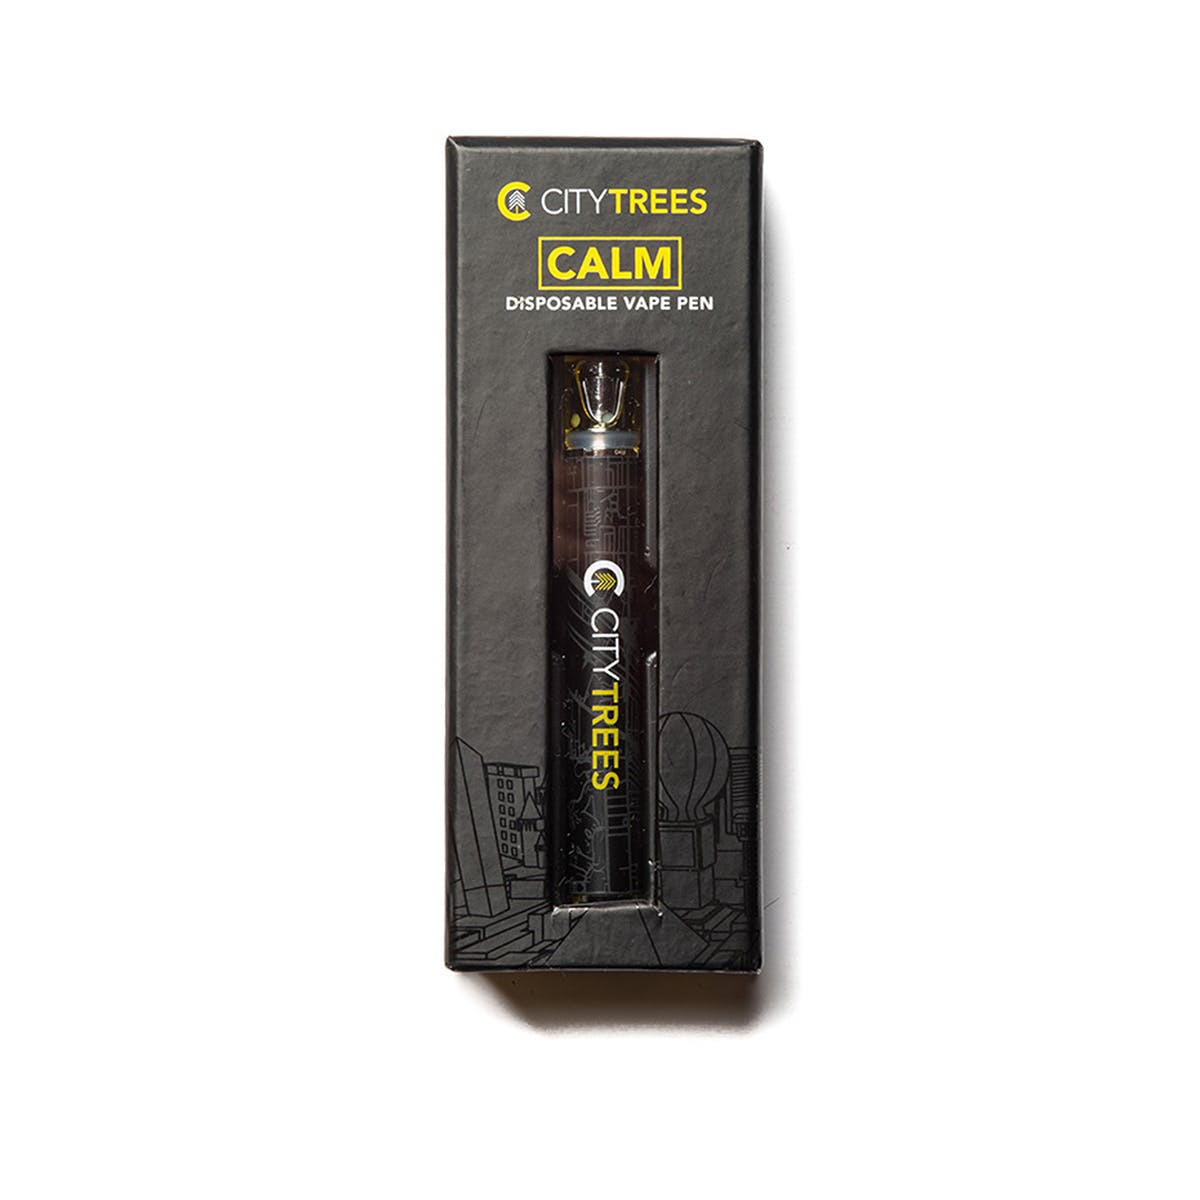 Calm ALL-IN-ONE Disposable Distillate Pen